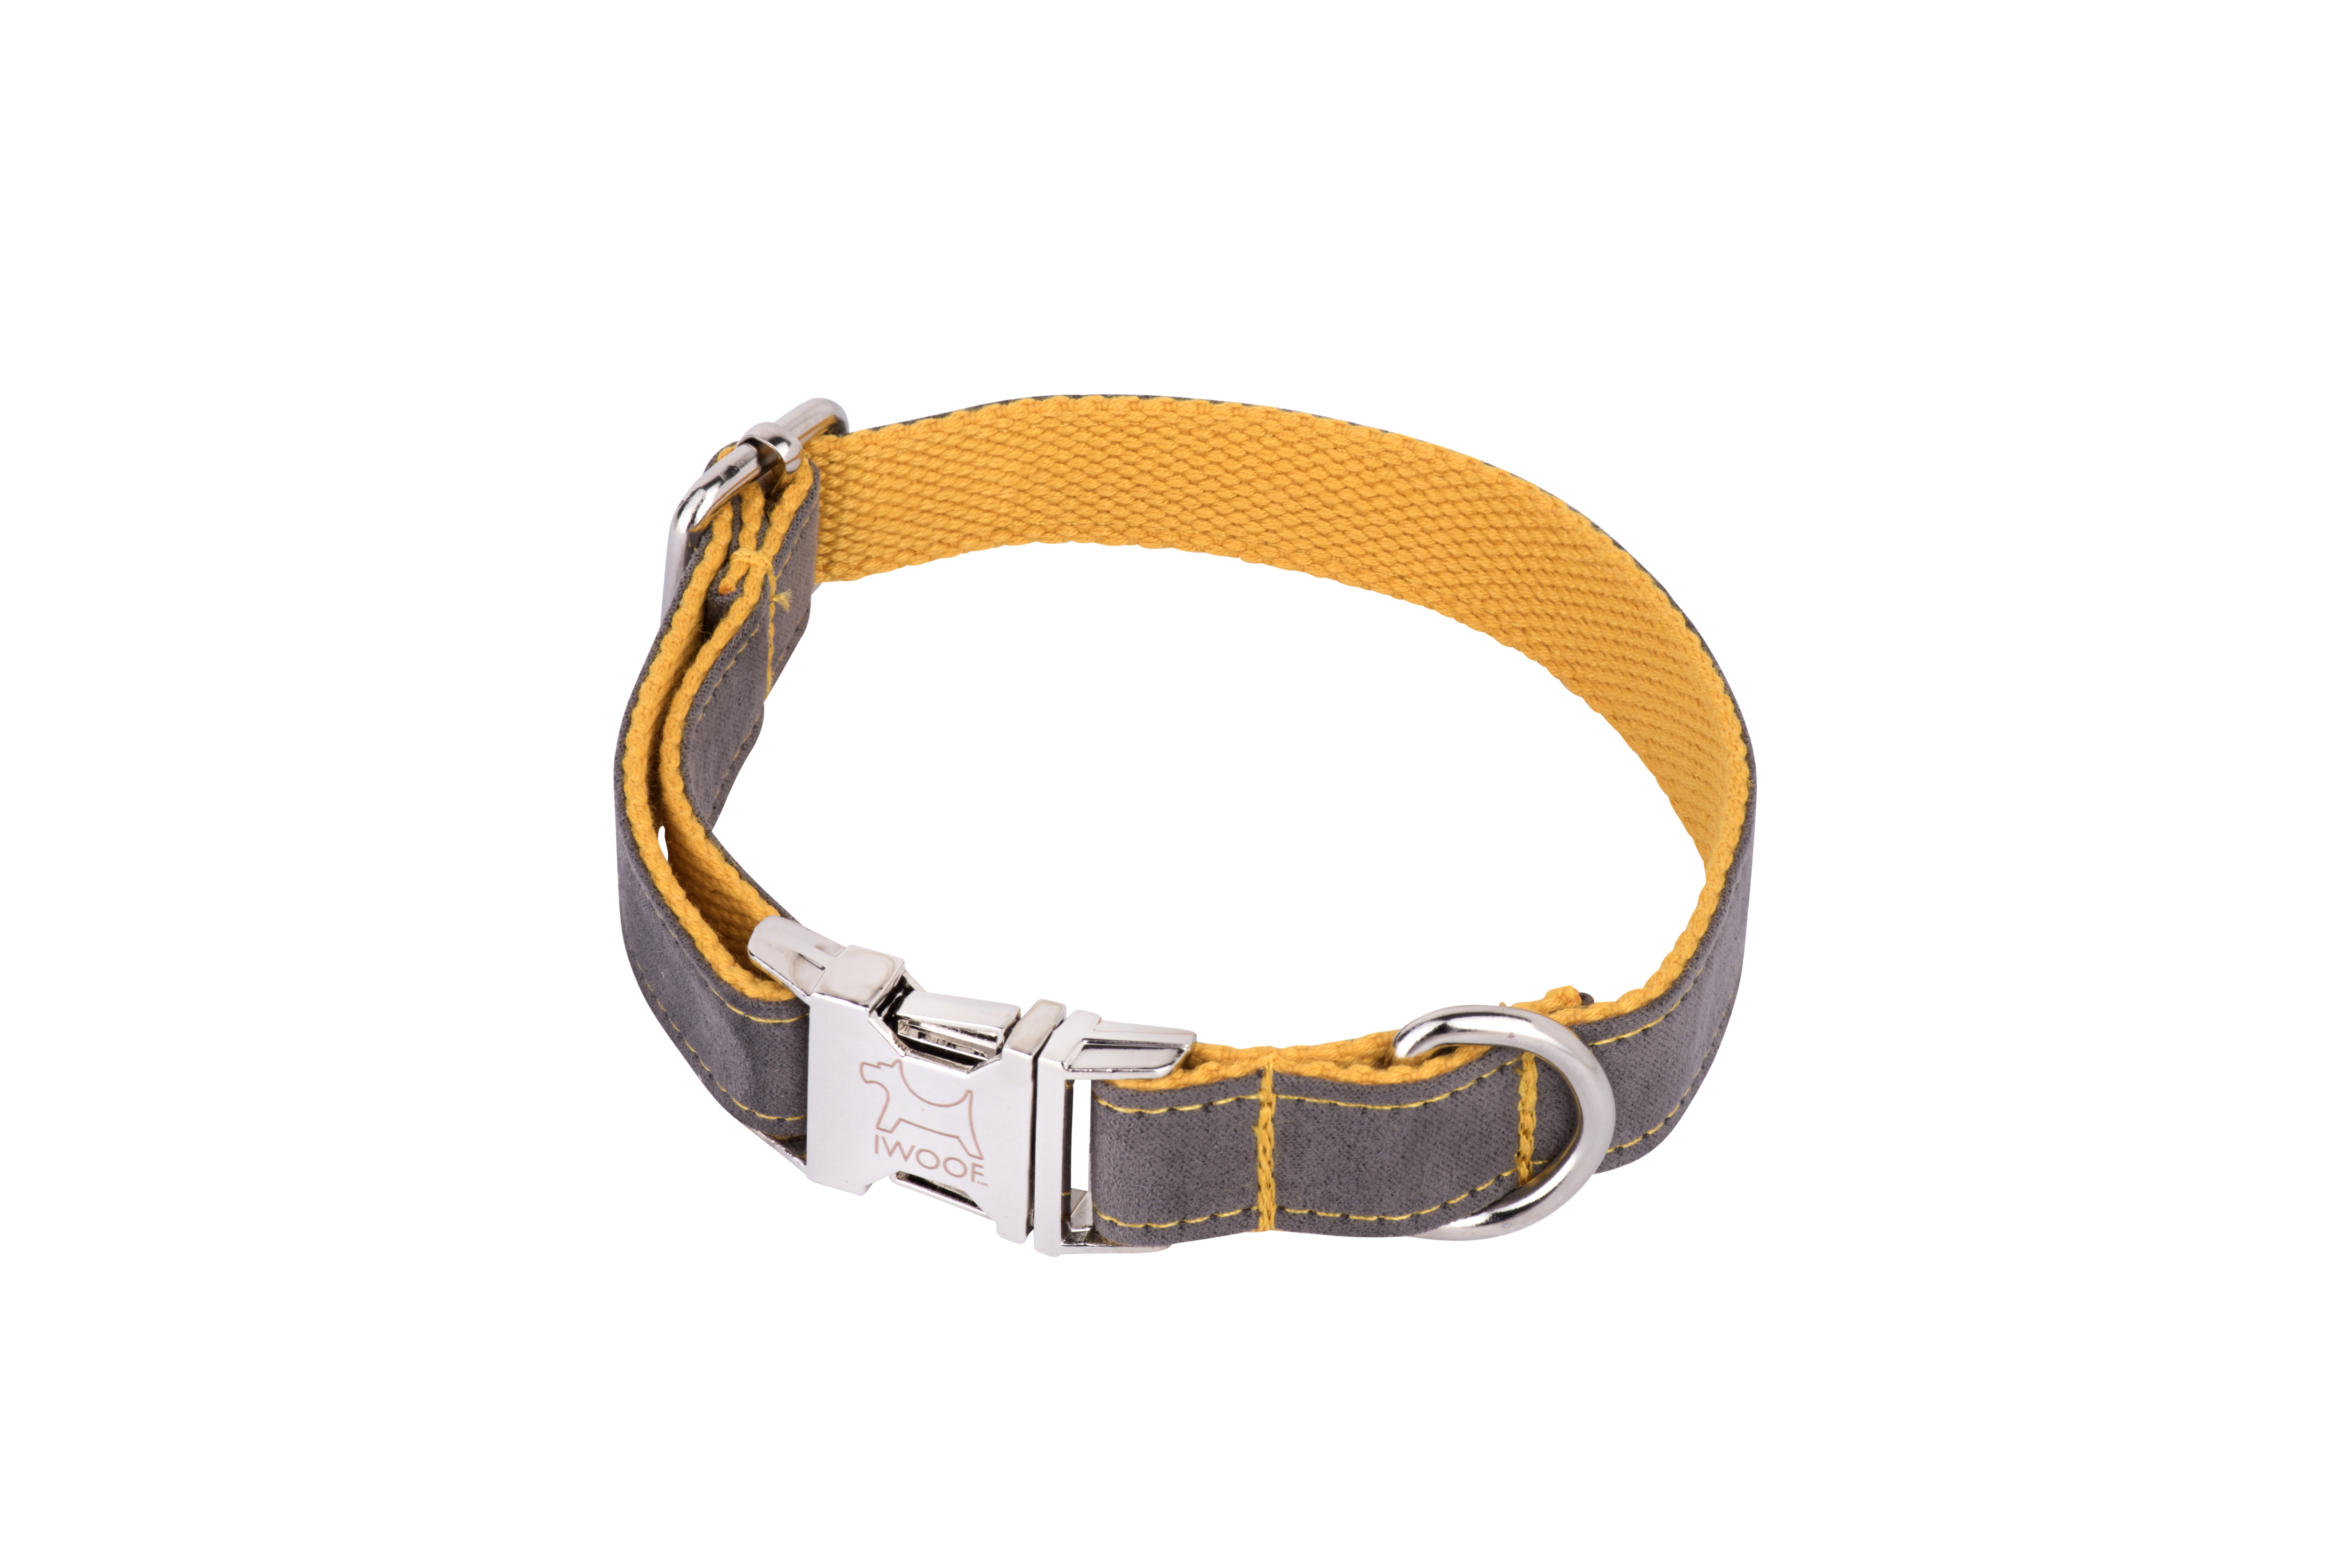 Seal Grey designer dog collar and matching designer dog lead by IWOOF